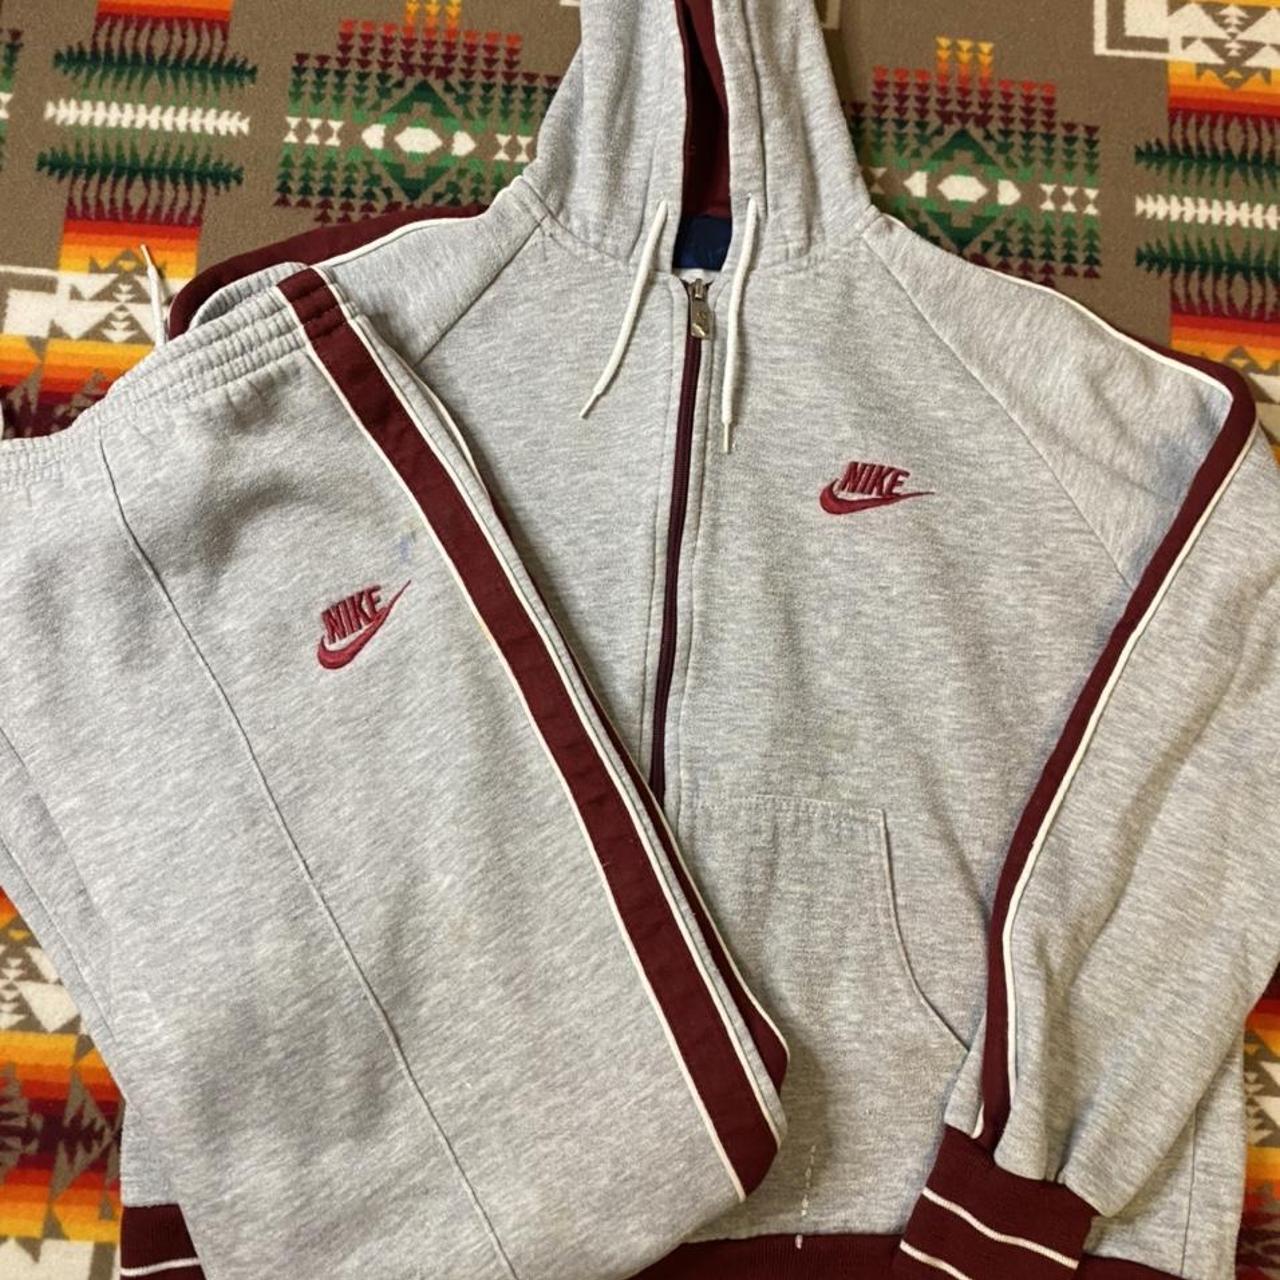 Vintage 80s Nike sweat suit bundle!!! Both are size... - Depop